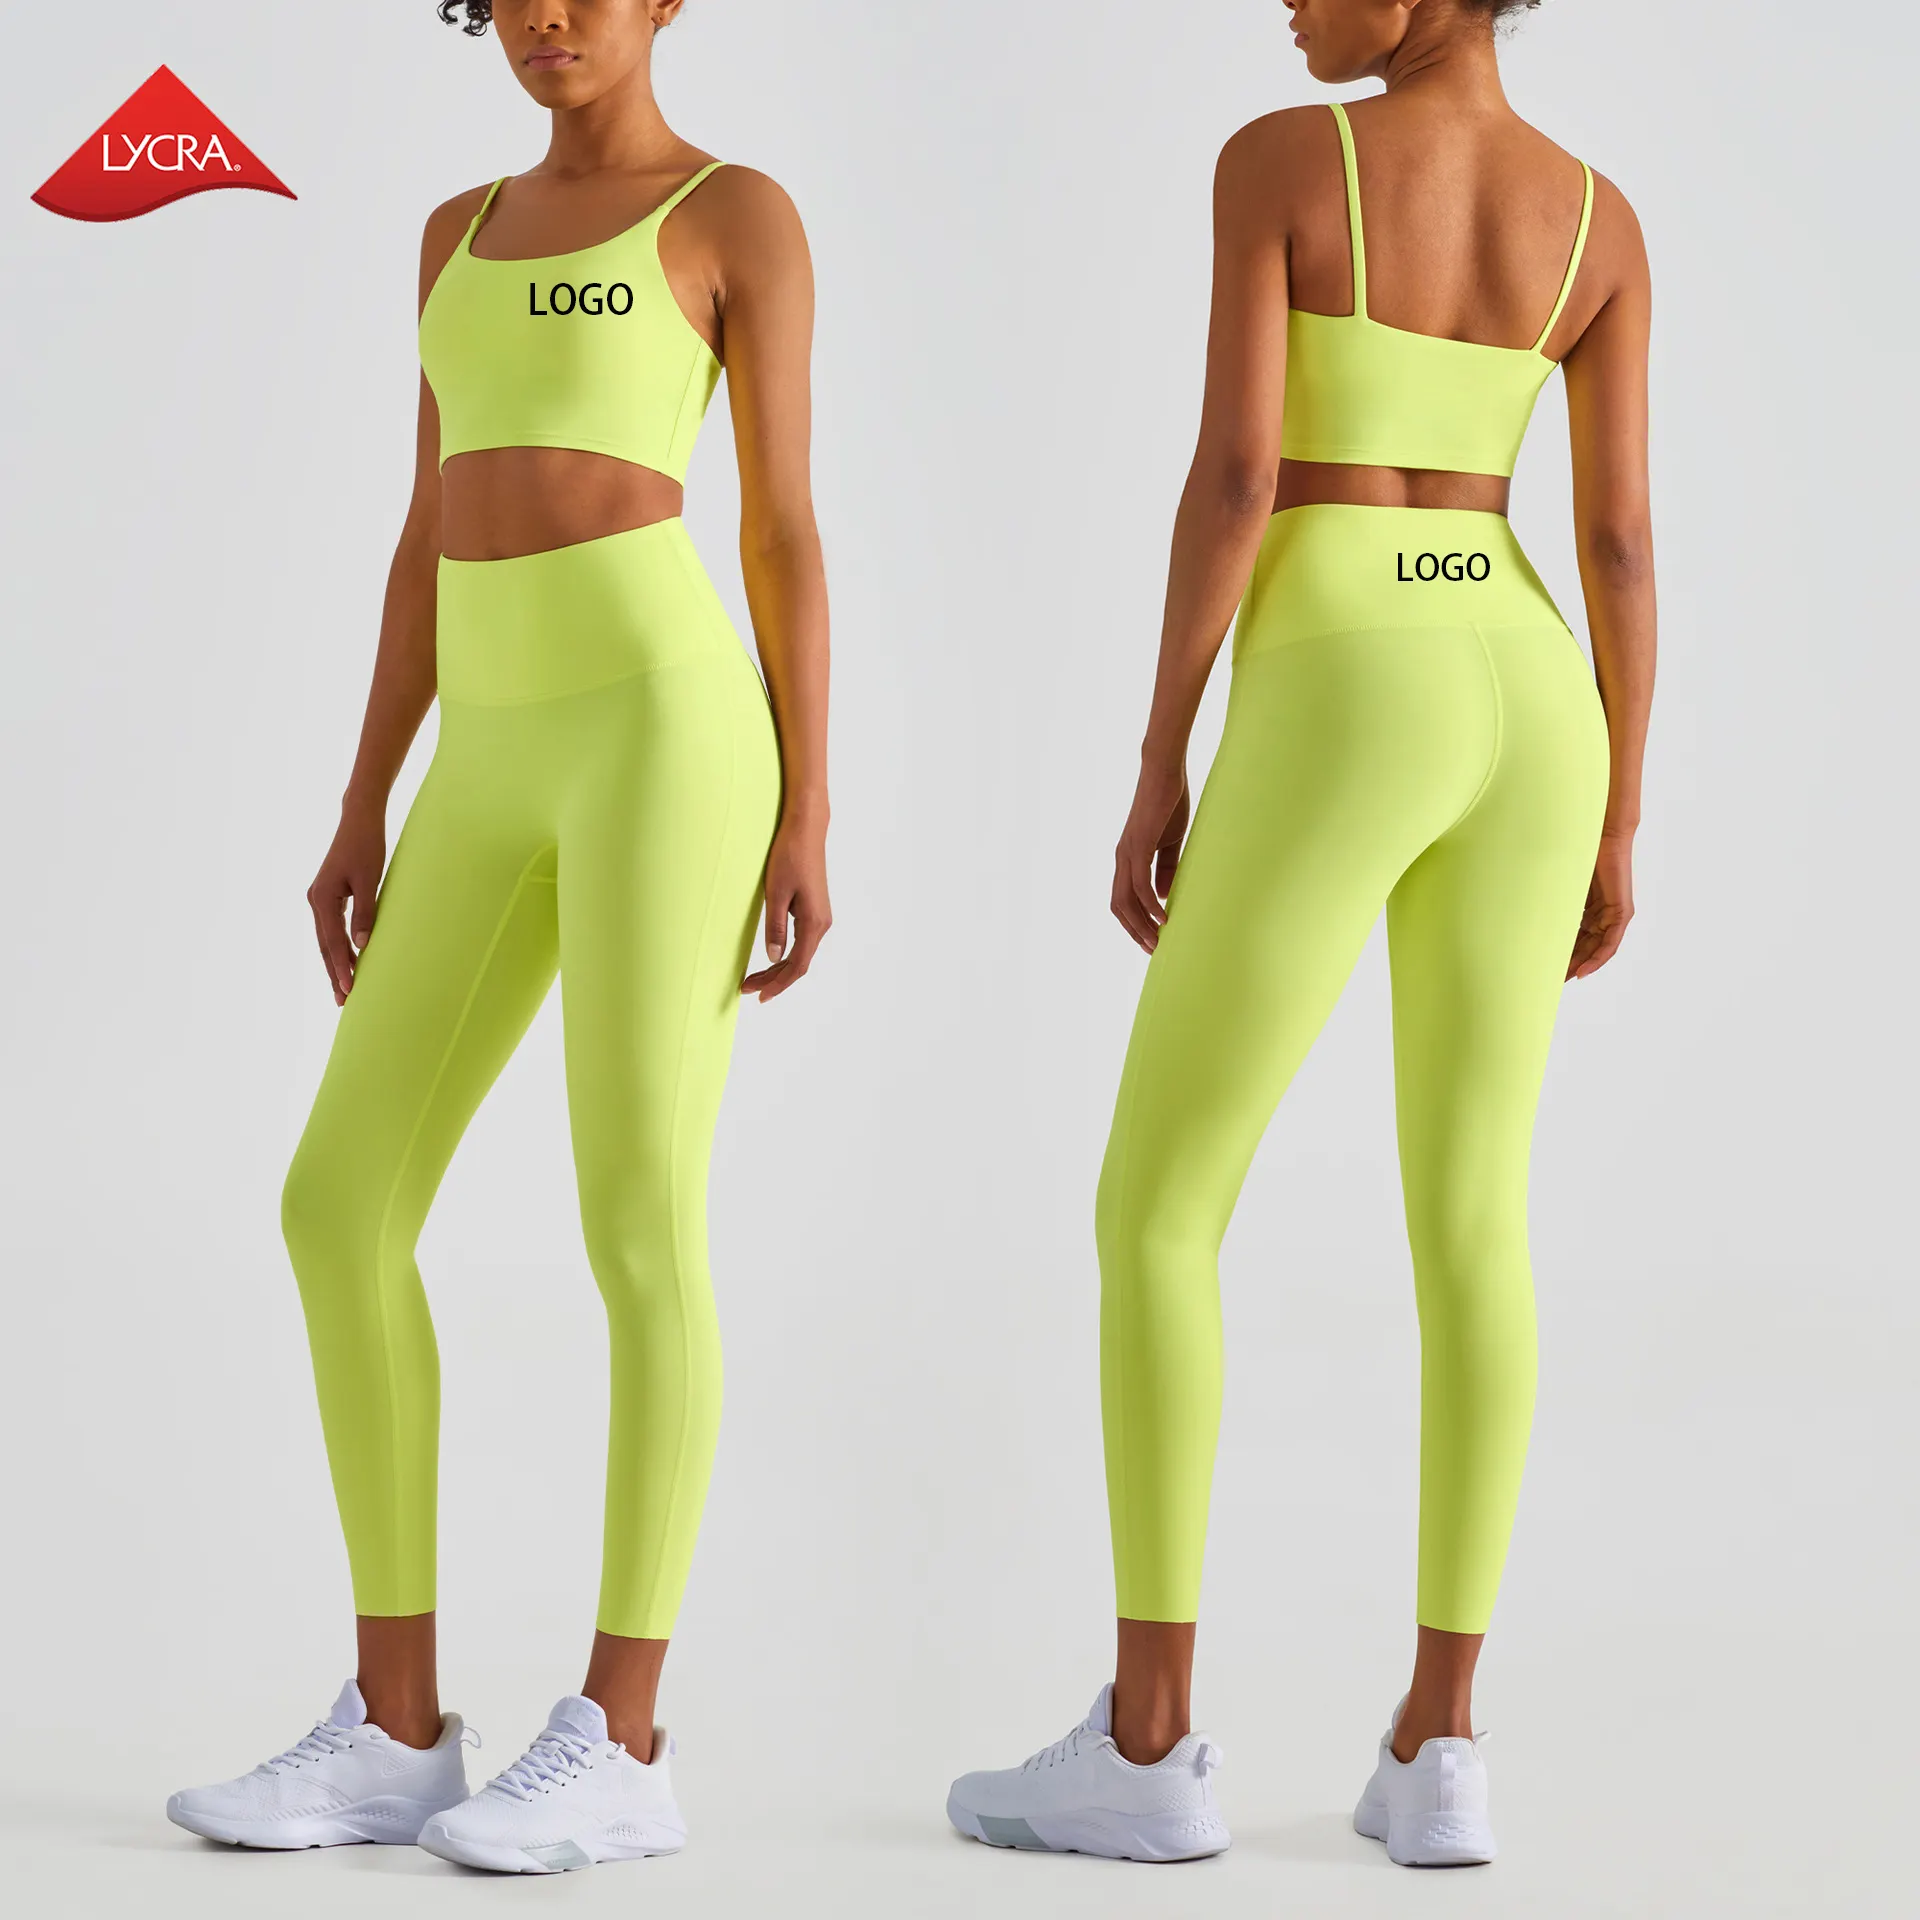 New Arrival 80% Nylon 20% Lycra Spandex Fabric Gym Fitness Yoga Set Women Workout Sports Clothing Bra And Leggings 2 Piece Set